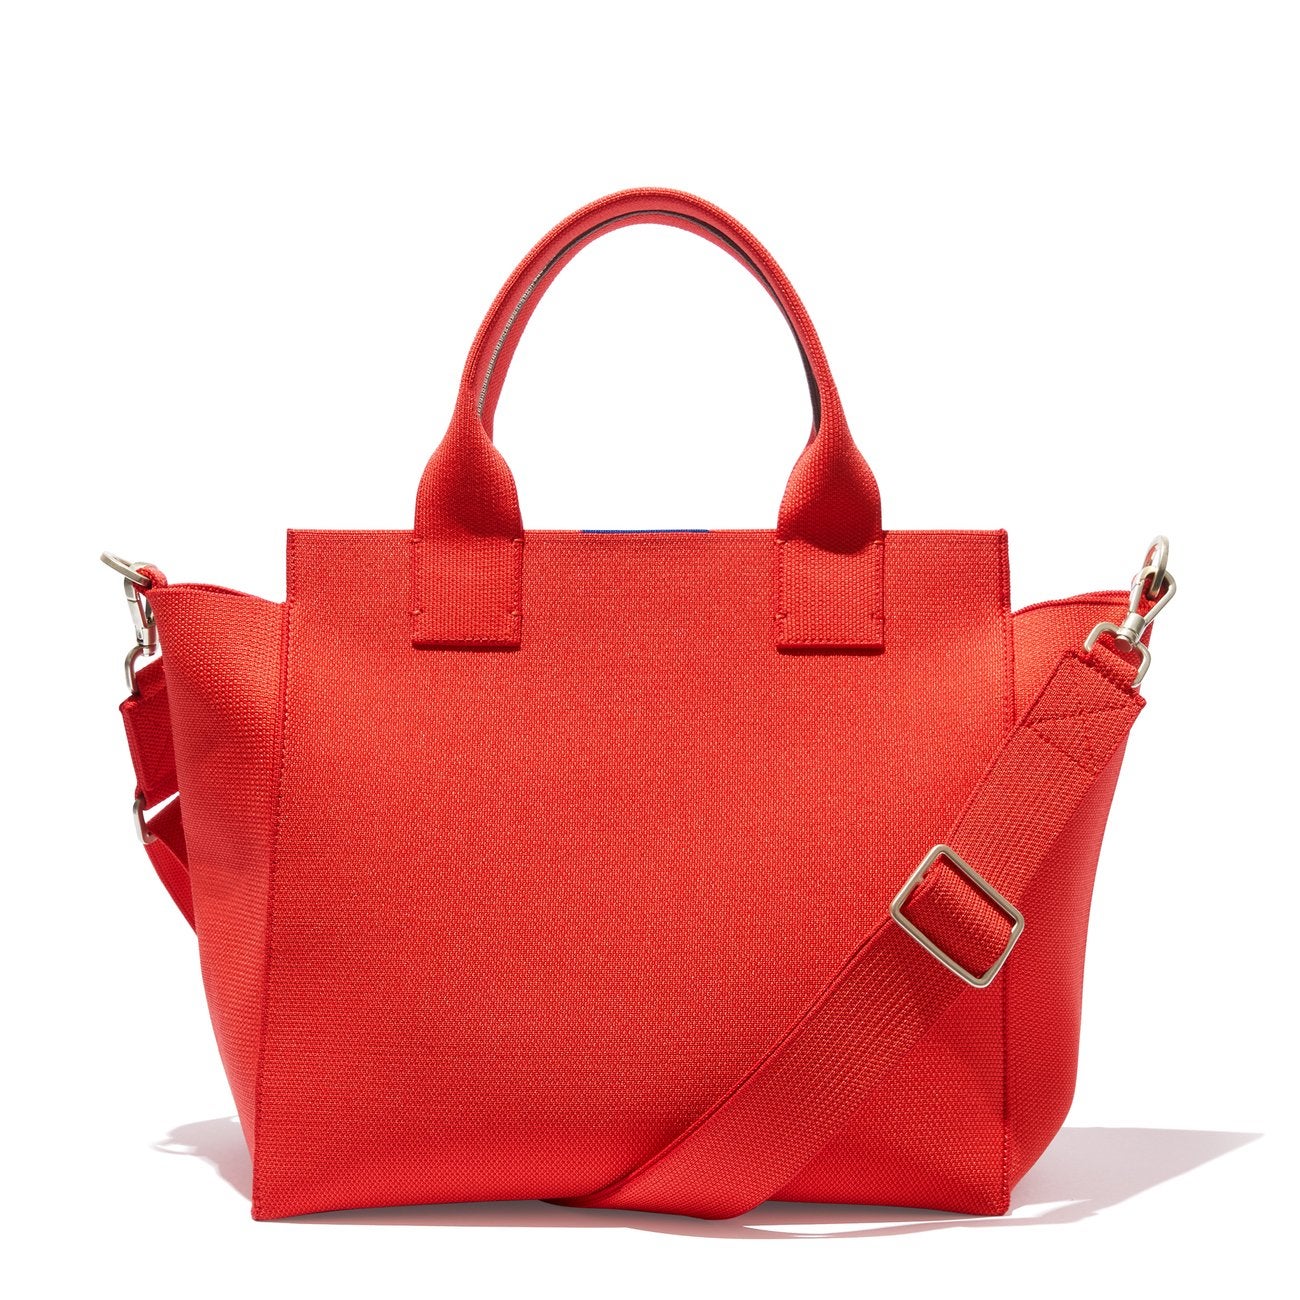 Rothy's Handbag in Bright Poppy